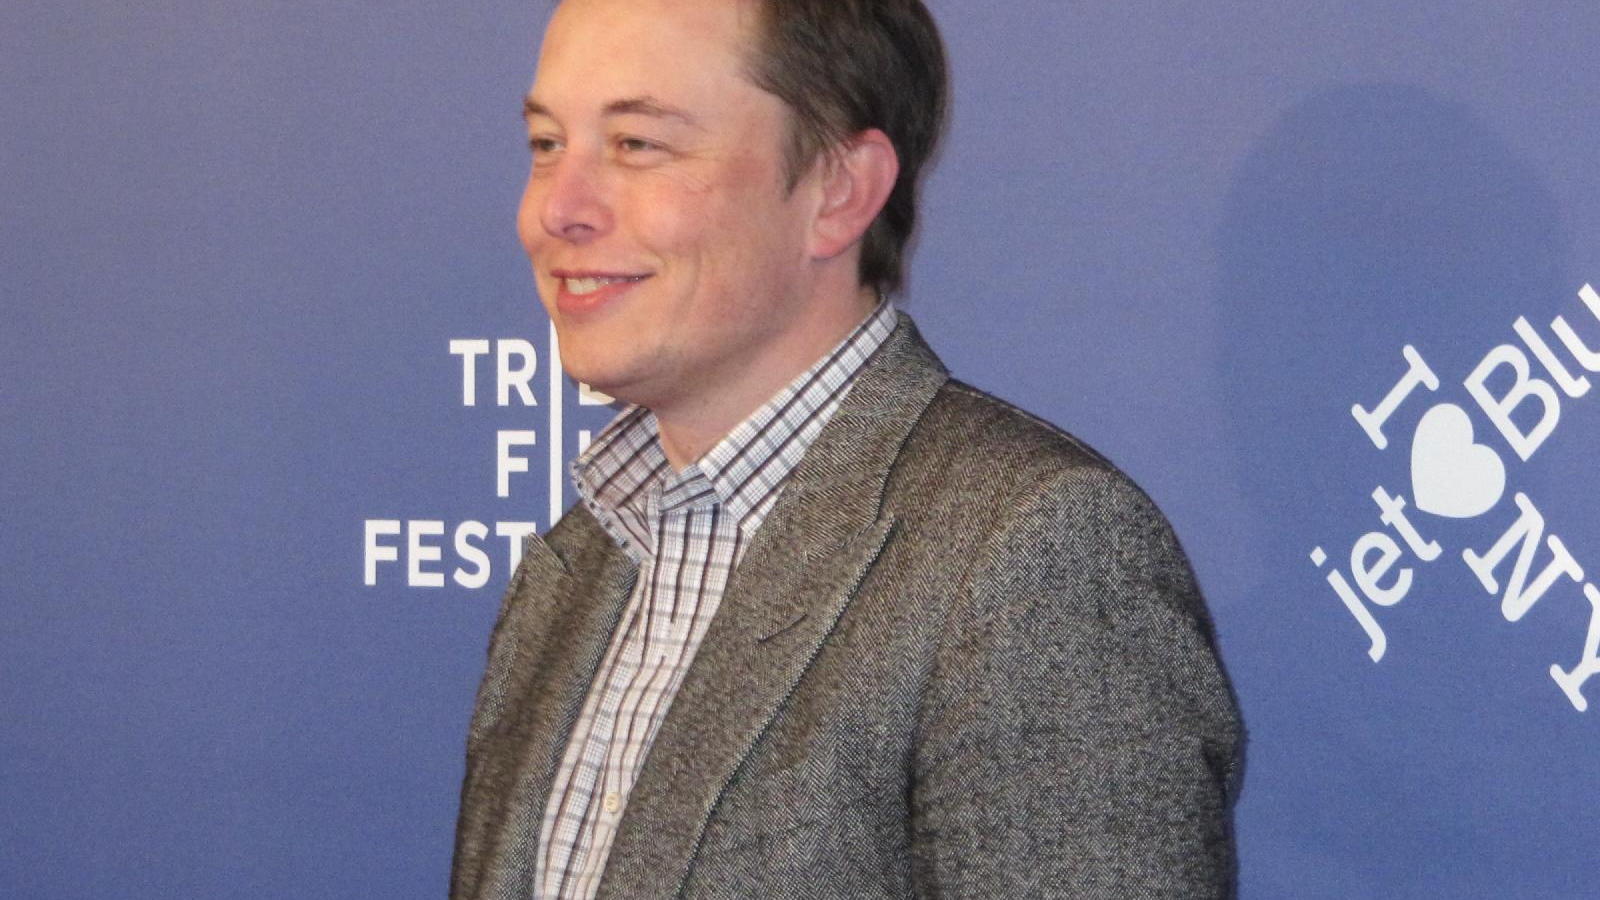 'Revenge of the Electric Car' premiere: Tesla Motors CEO Elon Musk on red carpet